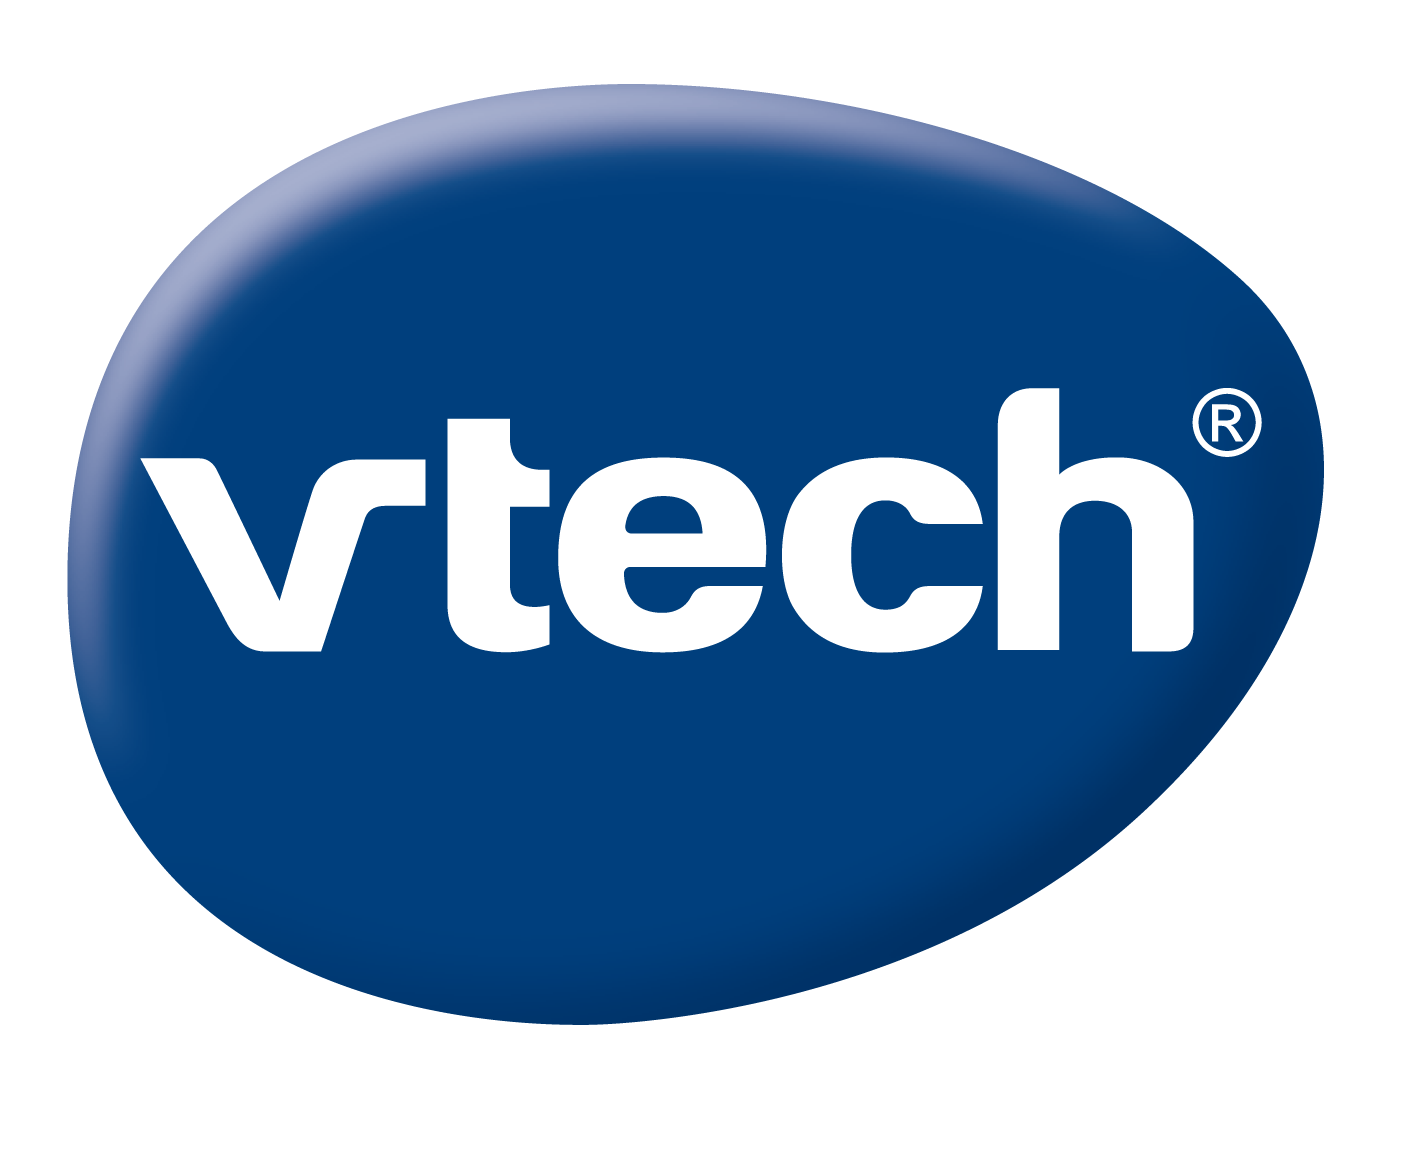 DVTech Logo photo - 1